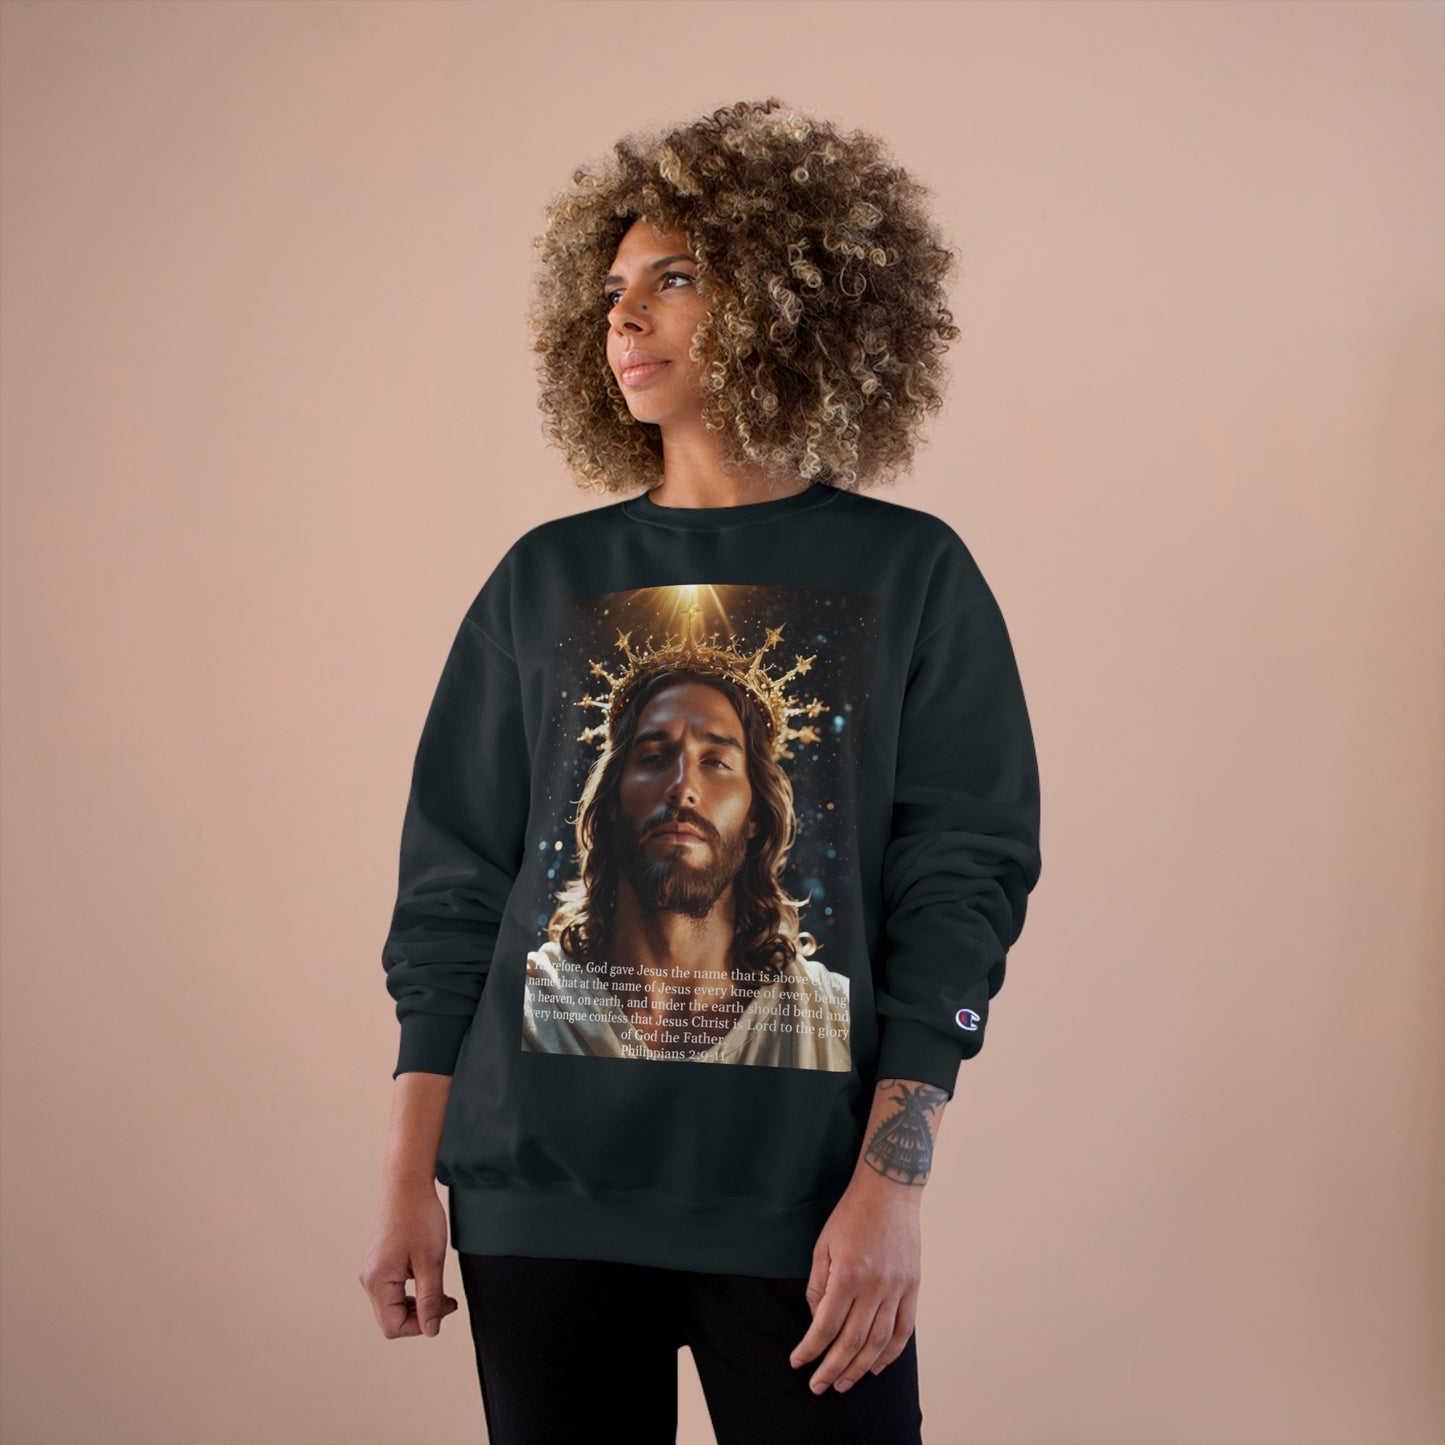 "Jesus Christ is Lord" Champion Sweatshirt